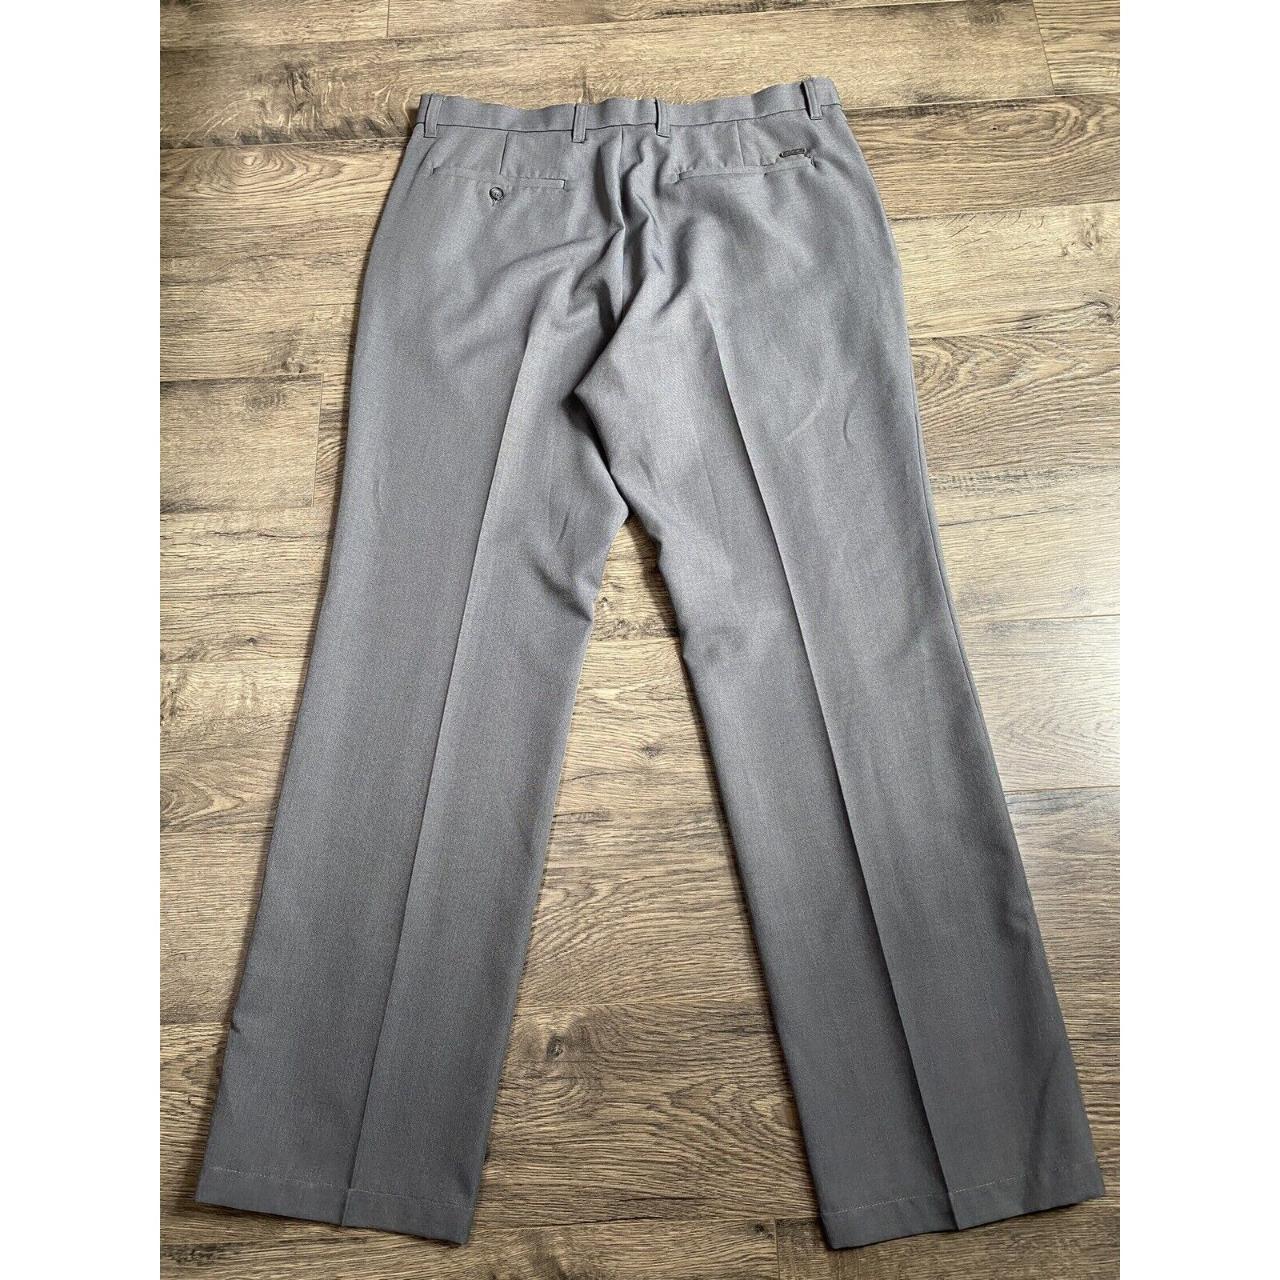 Greg Norman Mens 5 Pocket Pant P700 Performance Golf Trousers | Fruugo BE